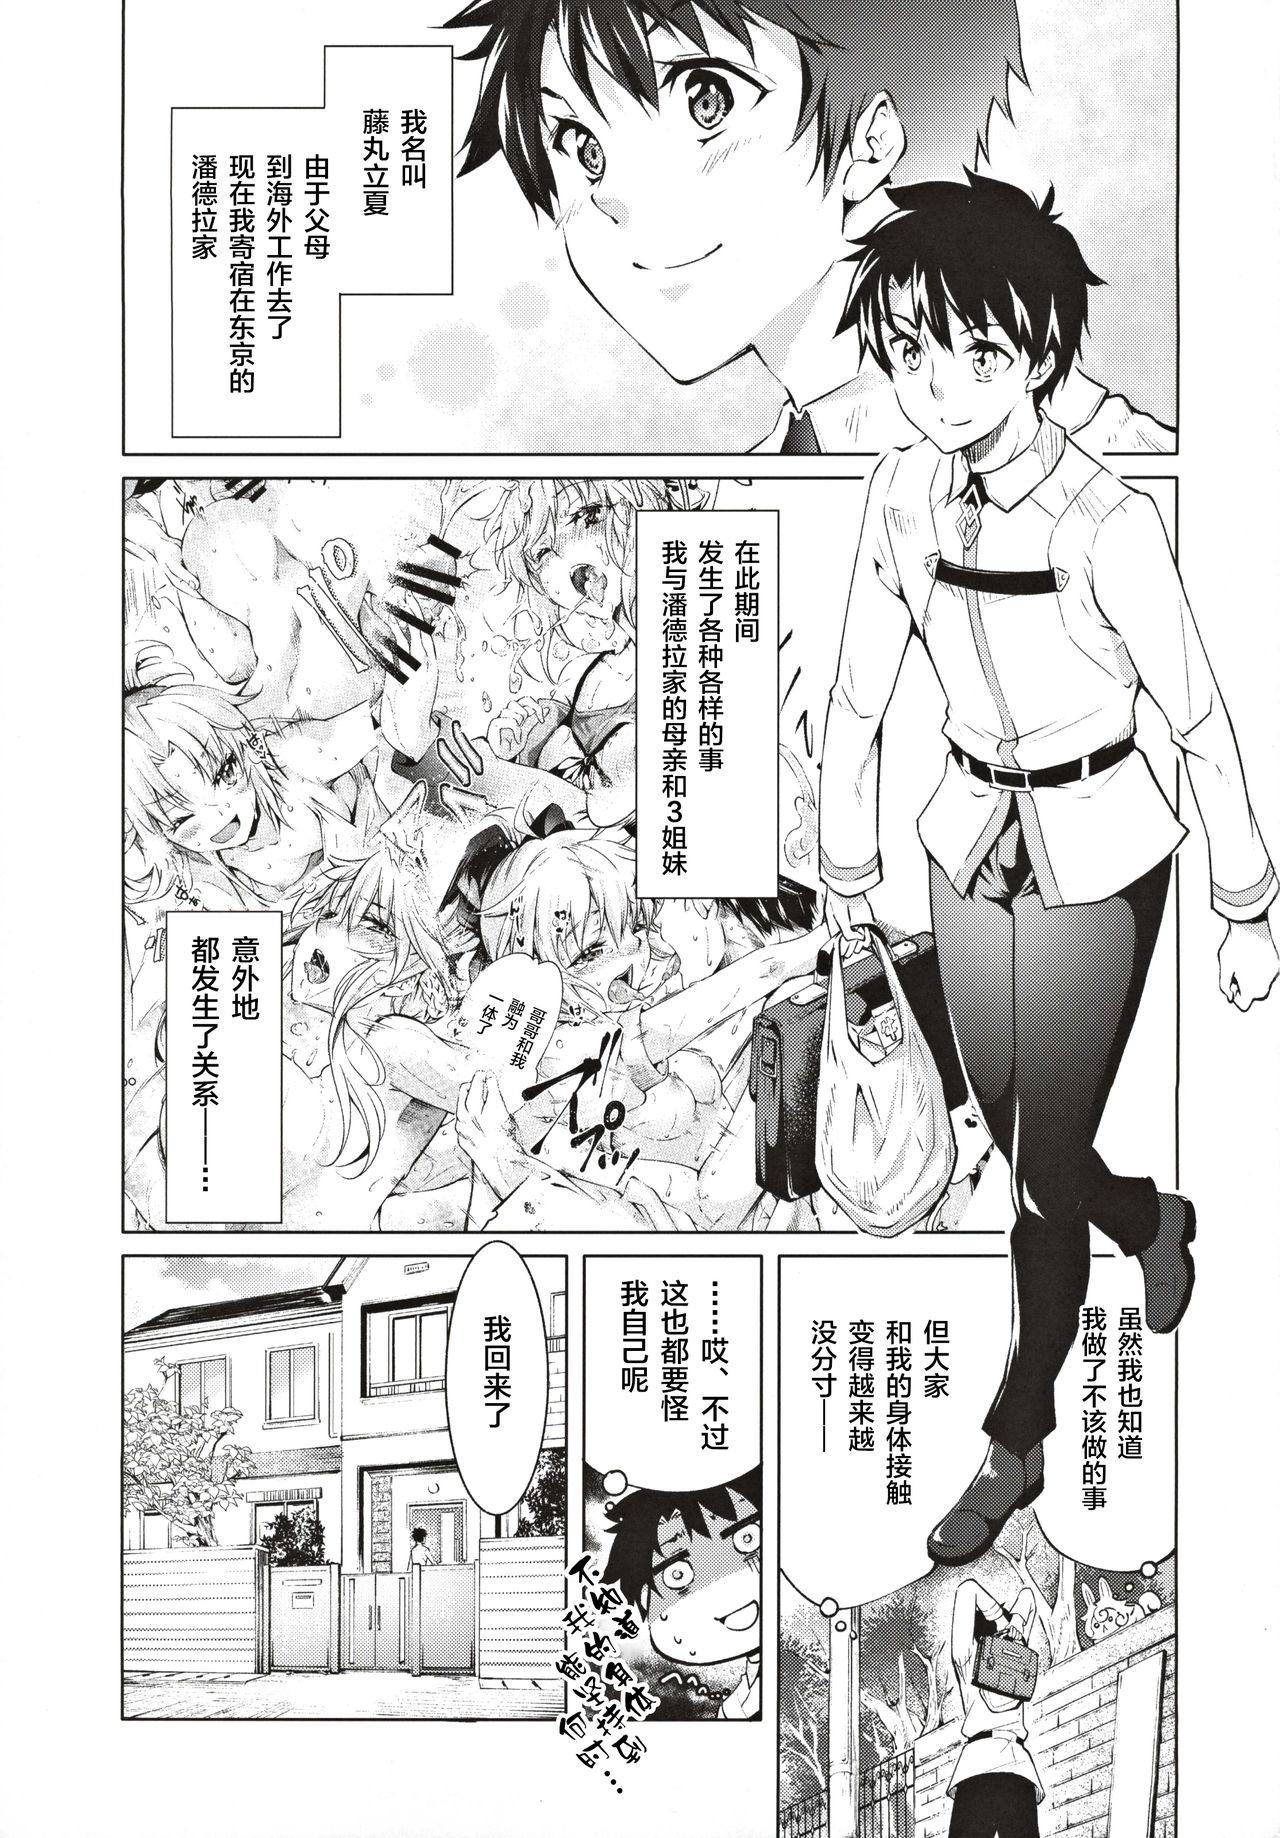 Perra Pendra Shimai no Seijijou - Fate grand order Stranger - Page 2